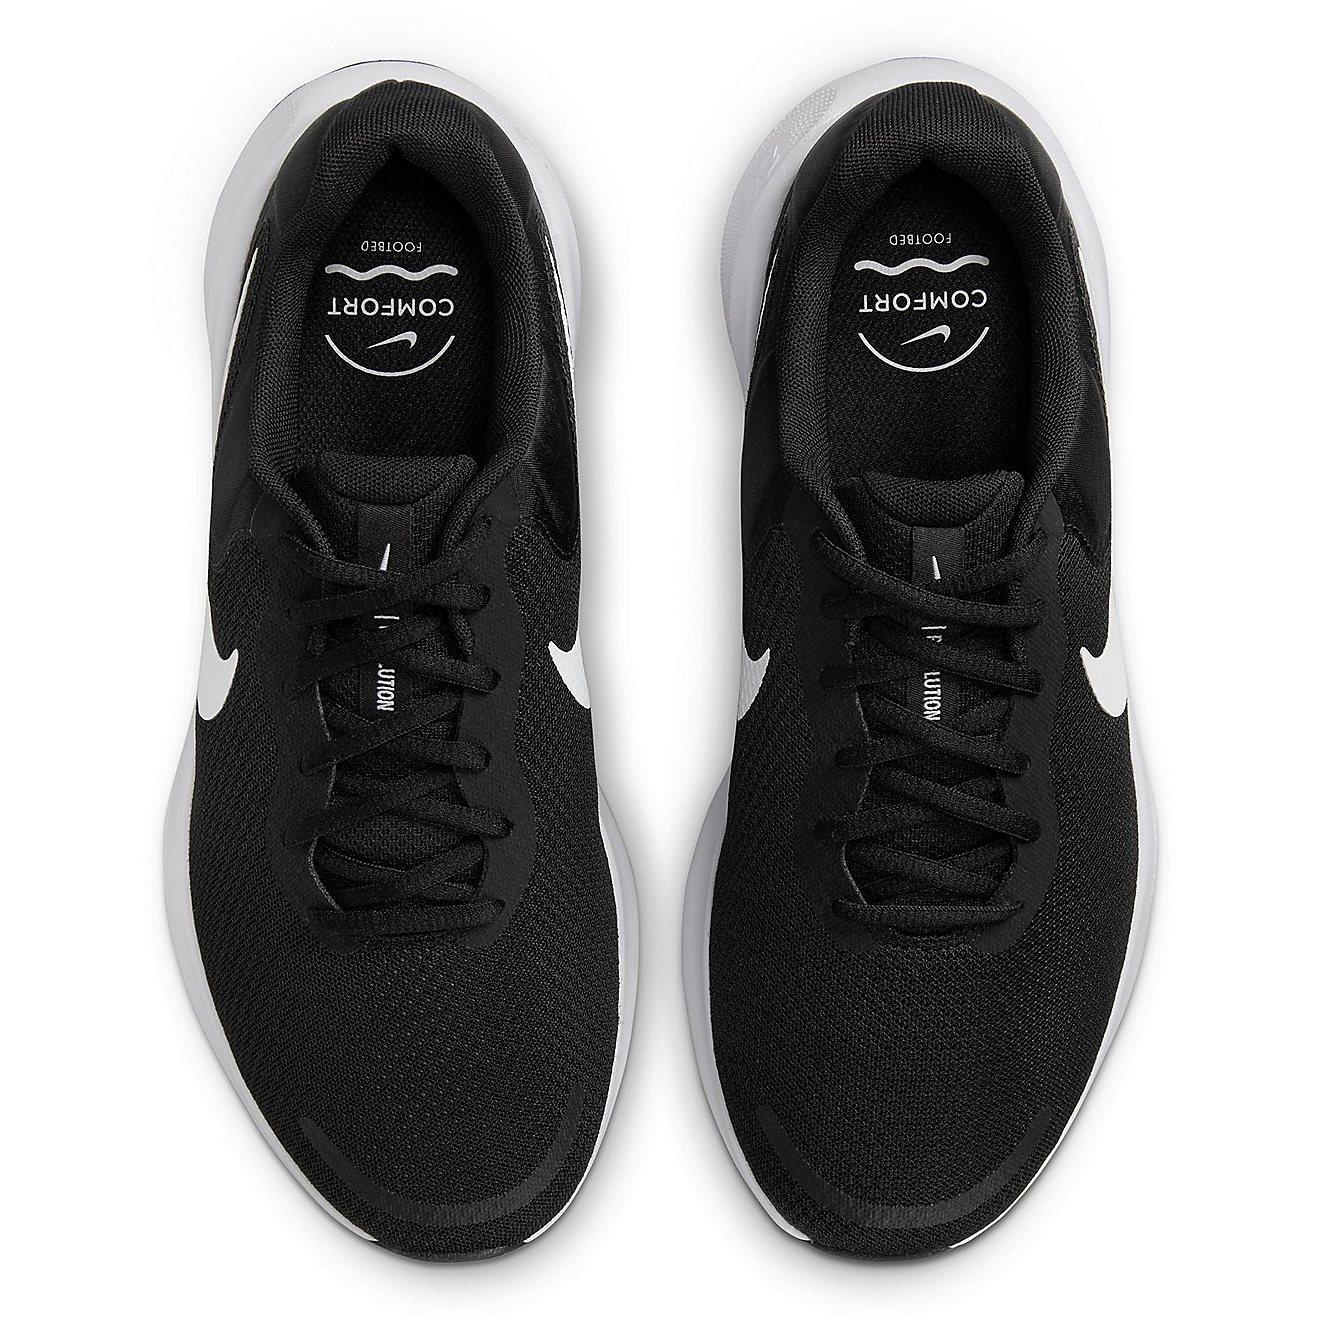 Nike Men's Revolution 7 Road Running Shoes | Academy